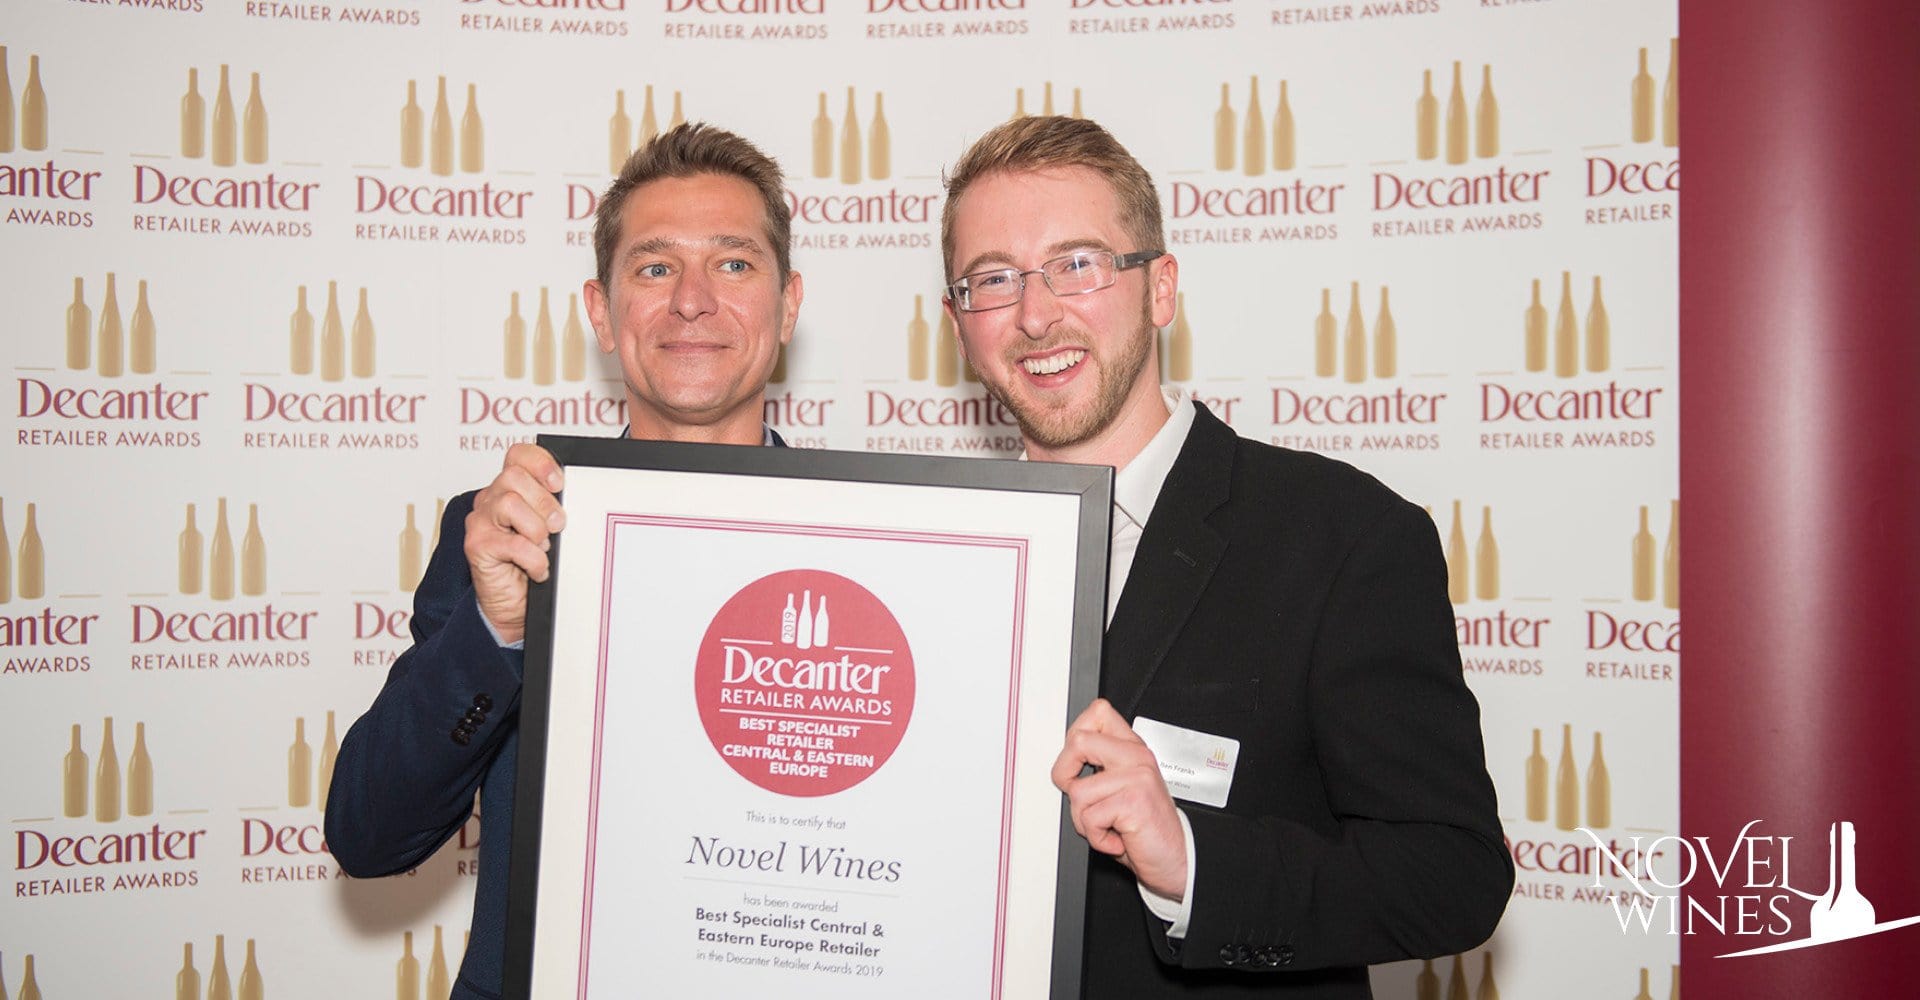 Novel Wines WINS Decanter Award for Best Specialist Retailer